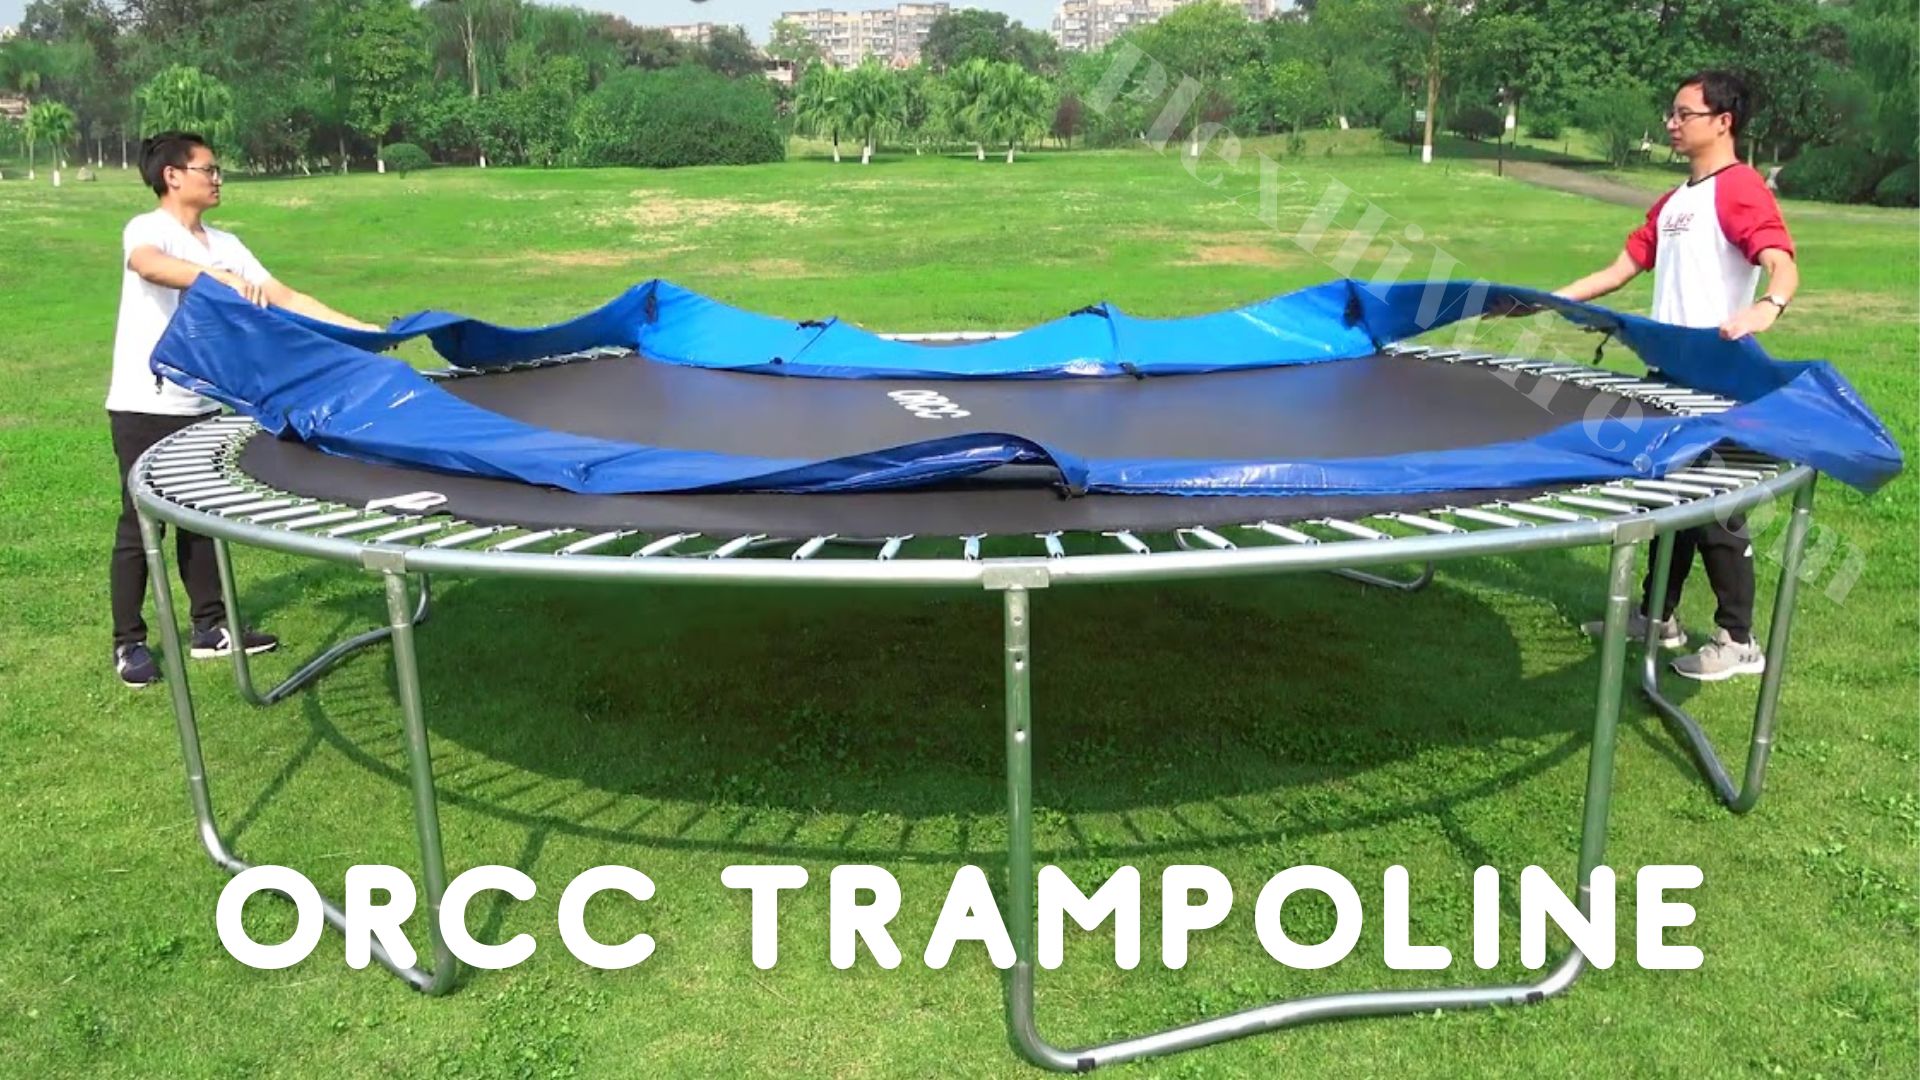 orcc trampoline